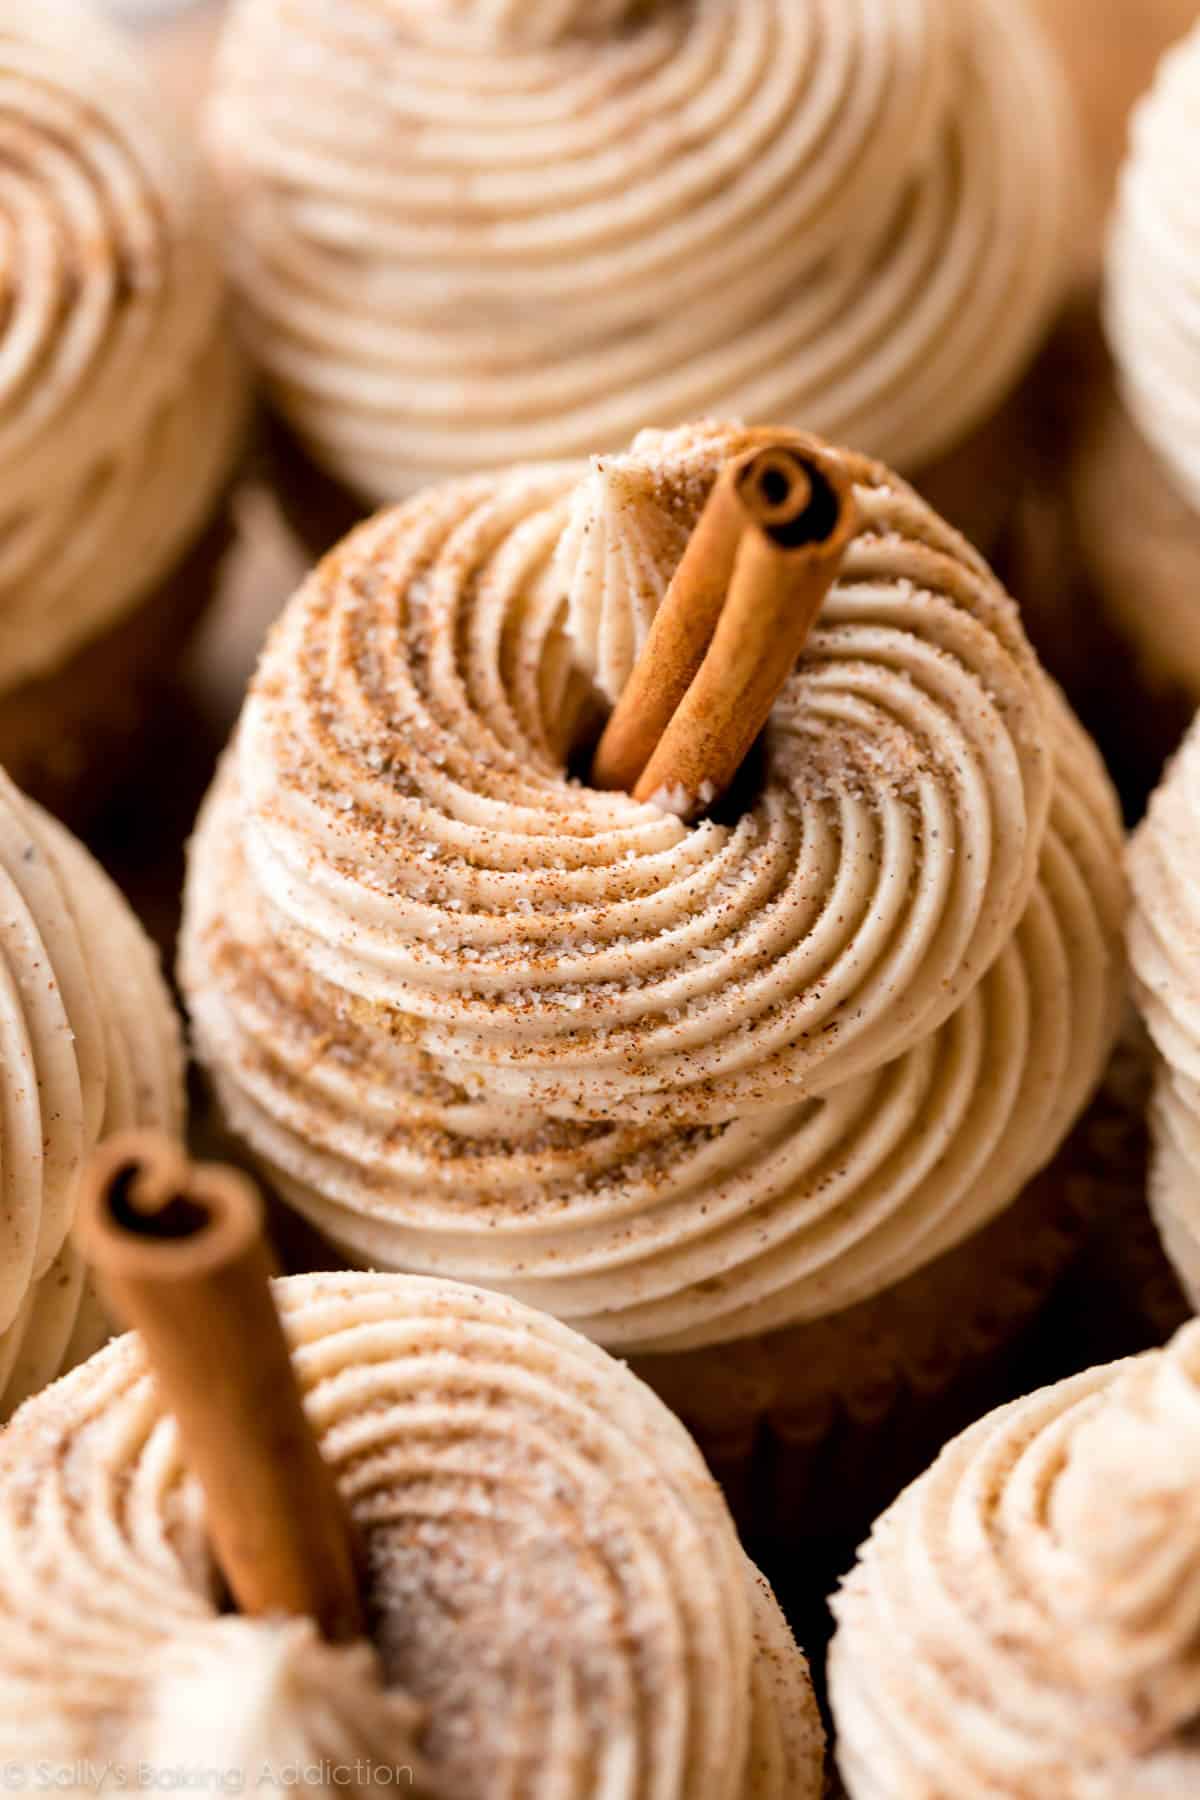 chai buttercream swirled on cupcakes with cinnamon stick garnish